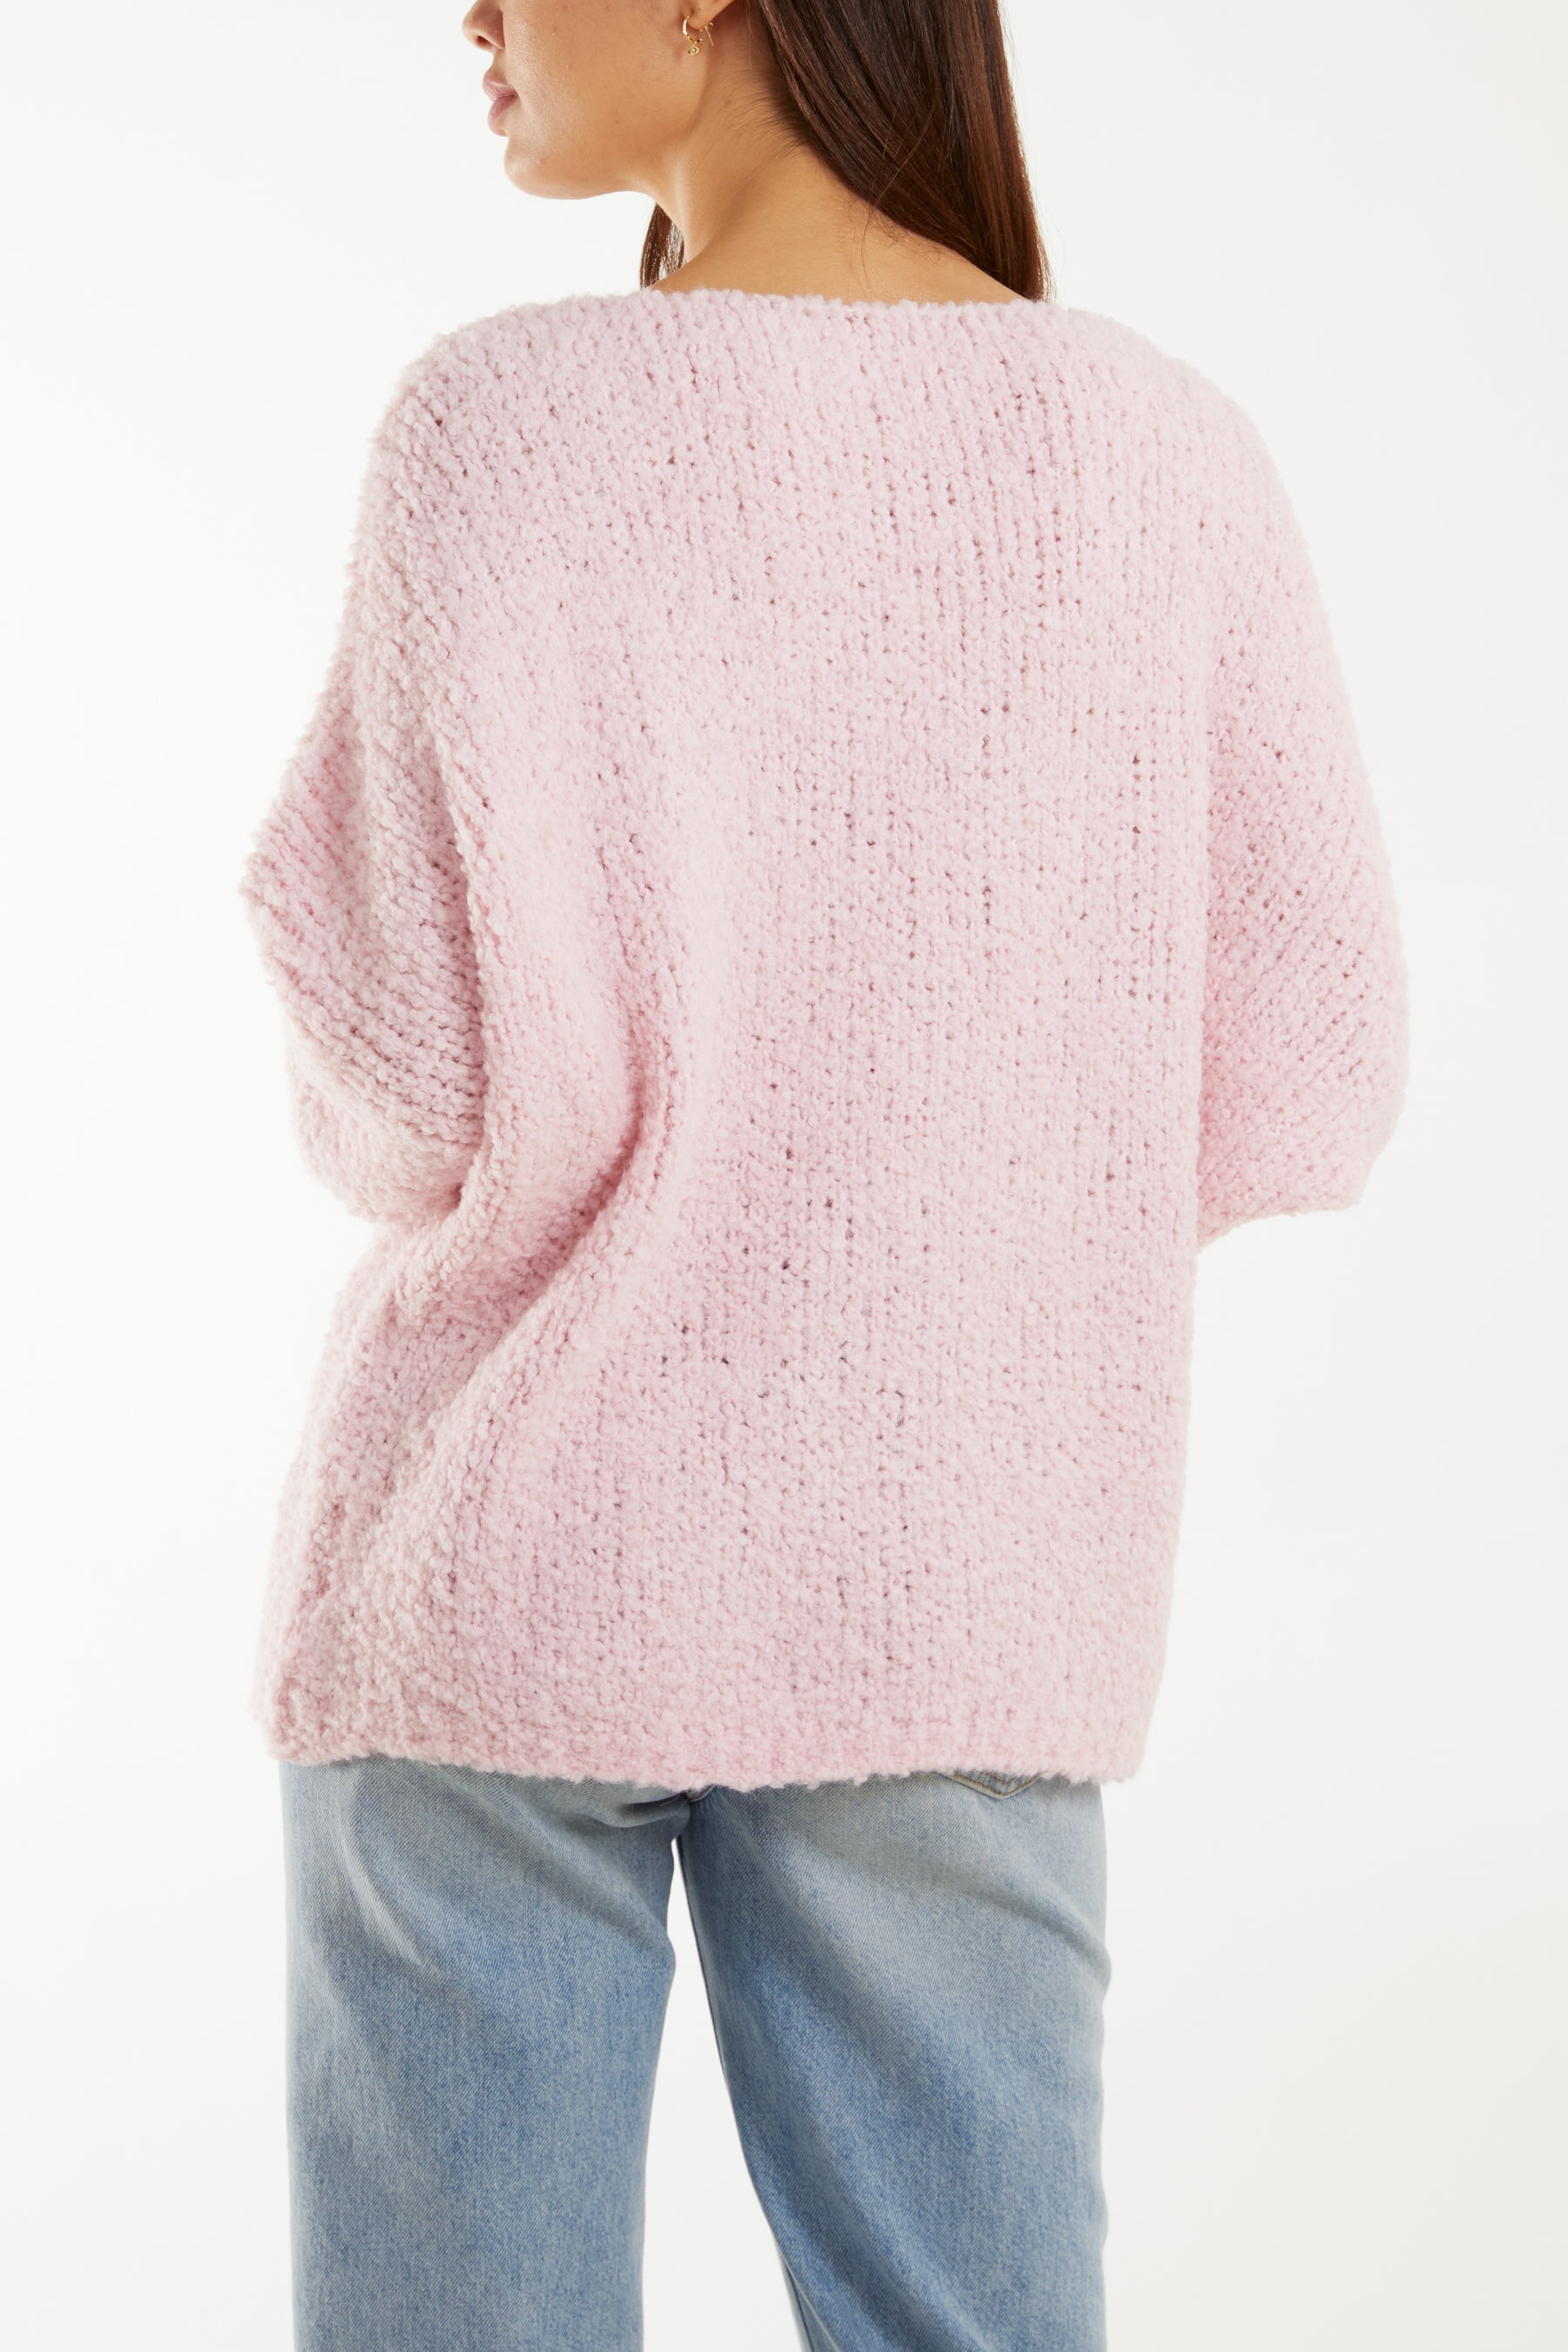 Wool Blend Daisy Boucle Super Soft Knit